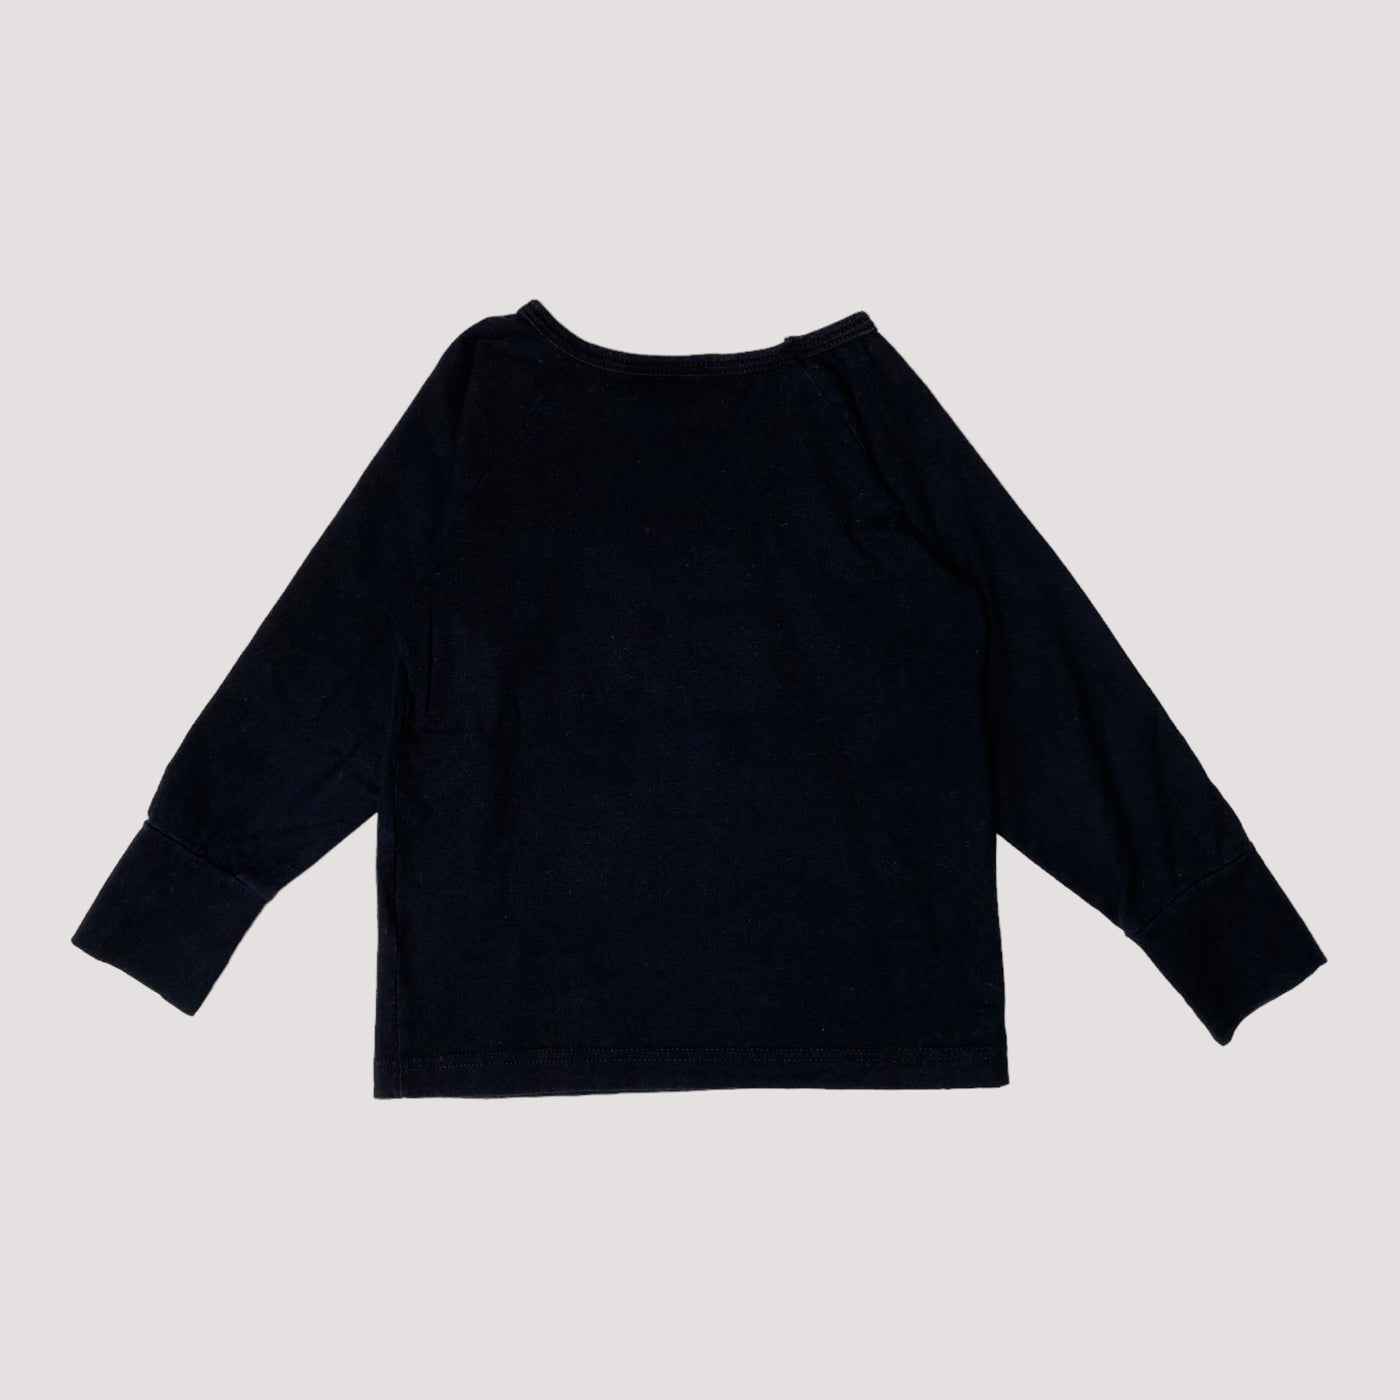 Papu shirt, black | 86/92cm